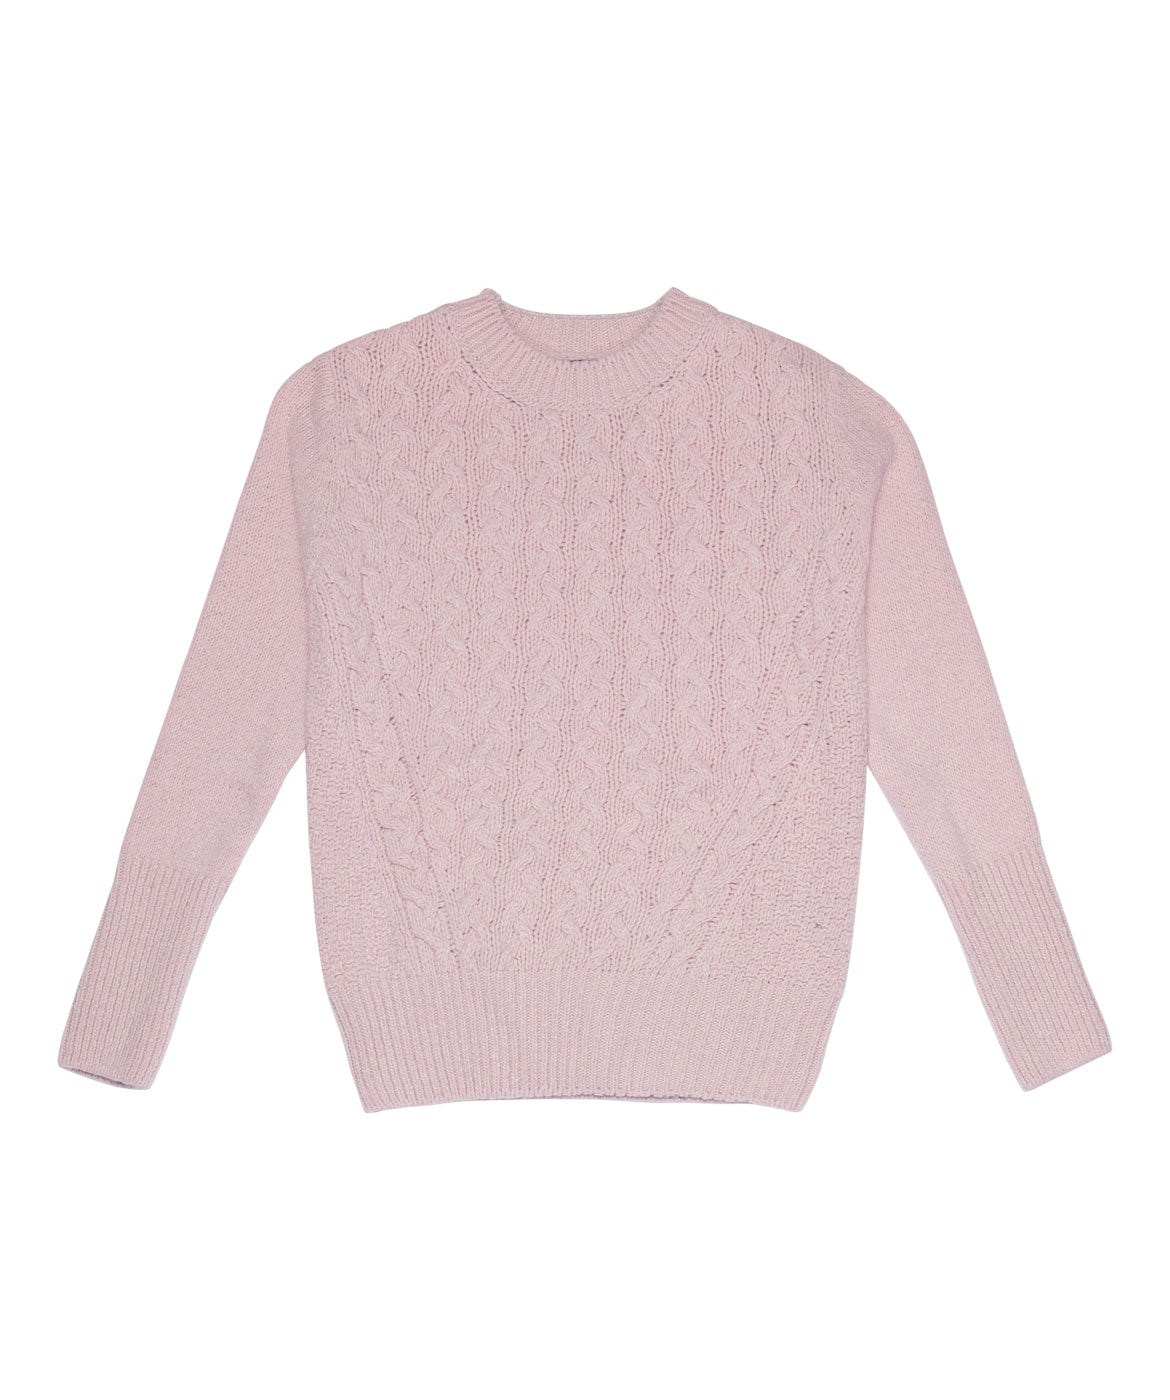 IrelandsEye Knitwear Kilcrea Cable Round Neck Sweater Pink Mist